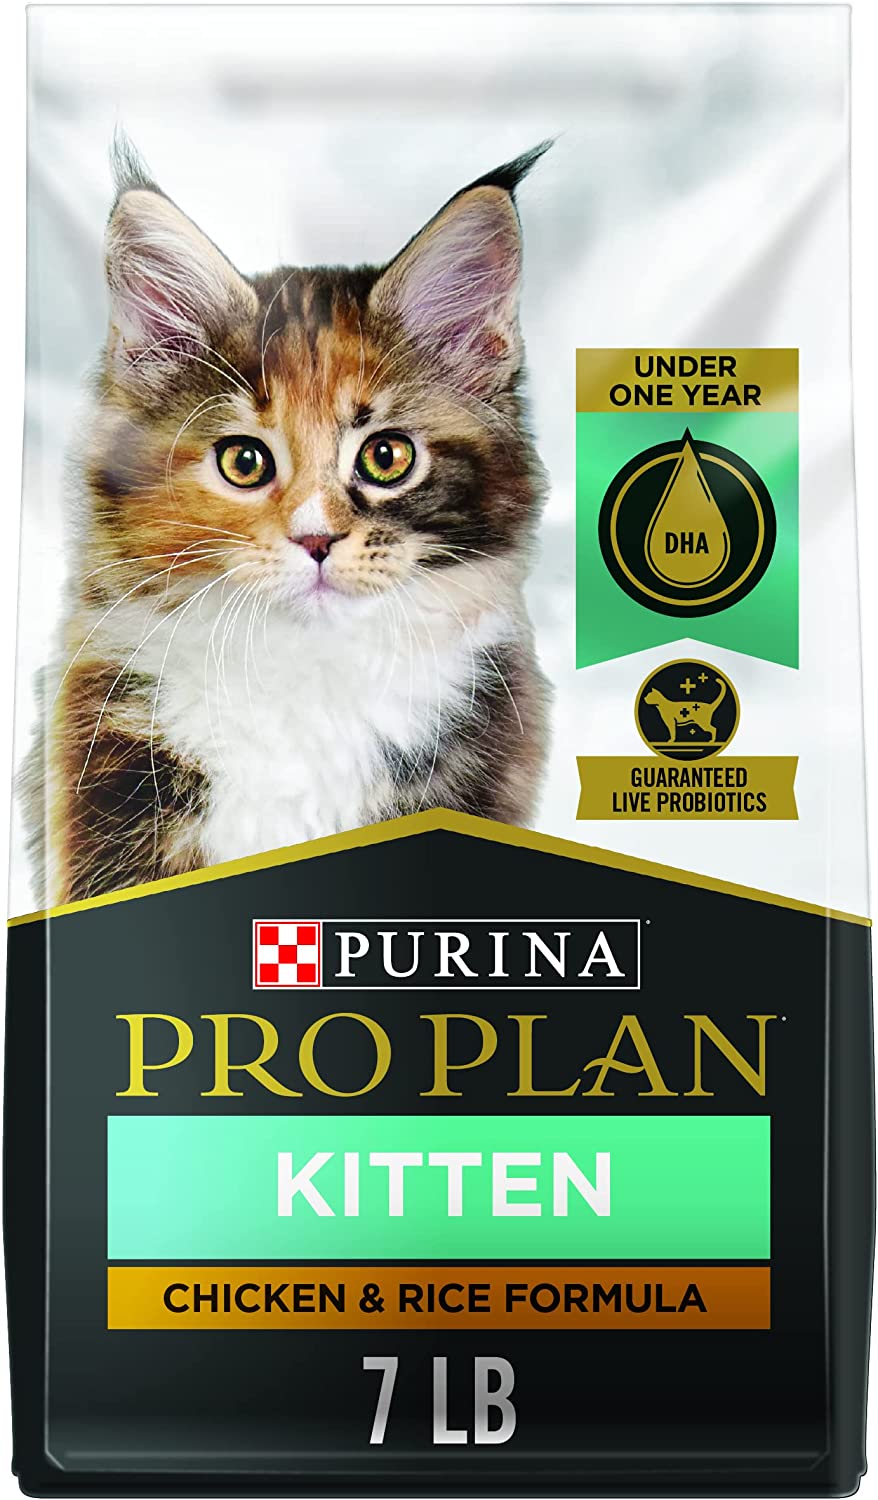 Purina pro plan kitten dry cat food